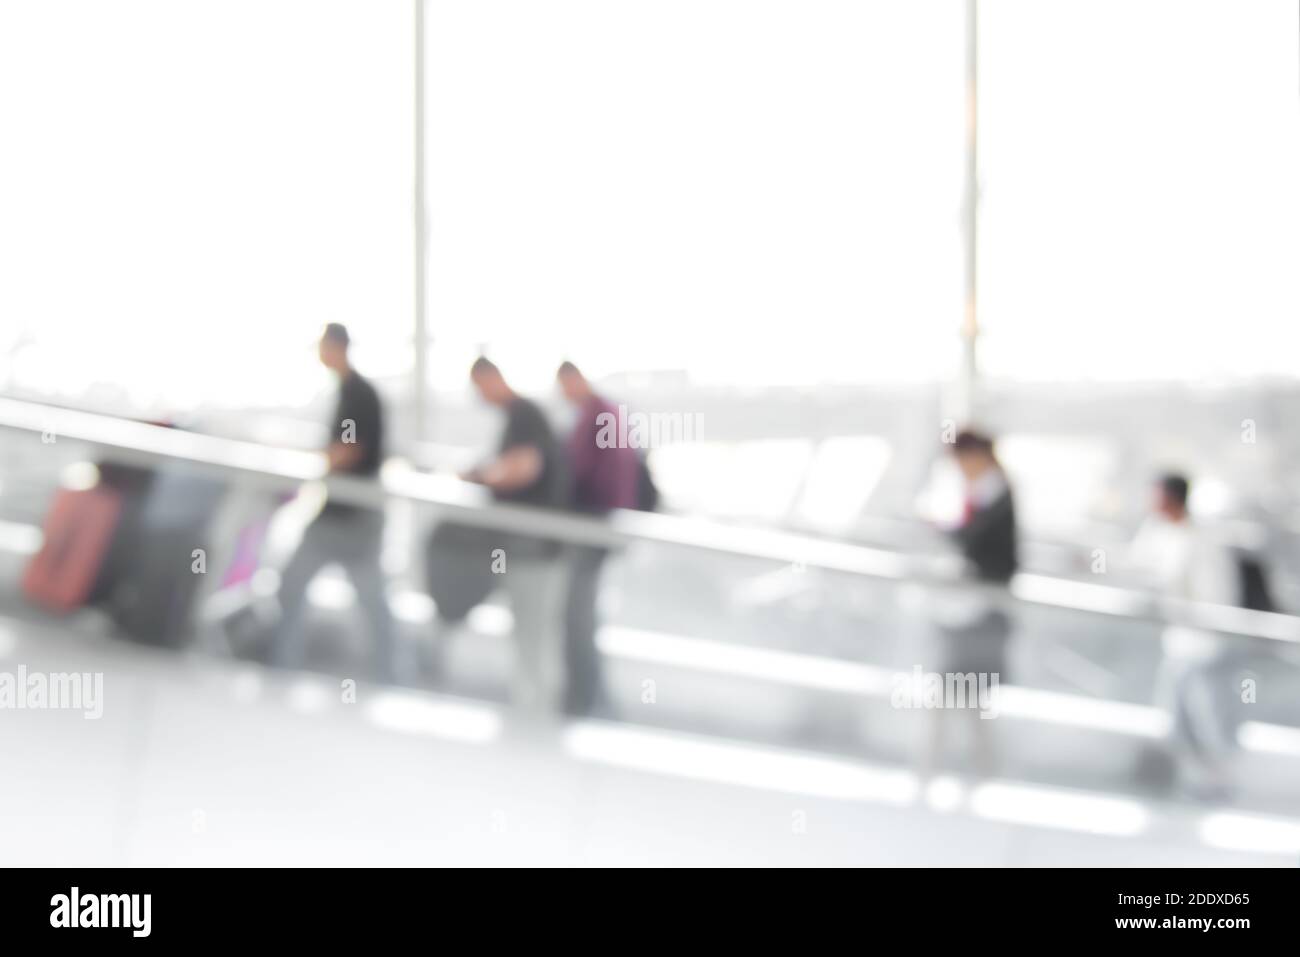 Blur image of people (travelers) on escalator inside airport terminal Stock Photo